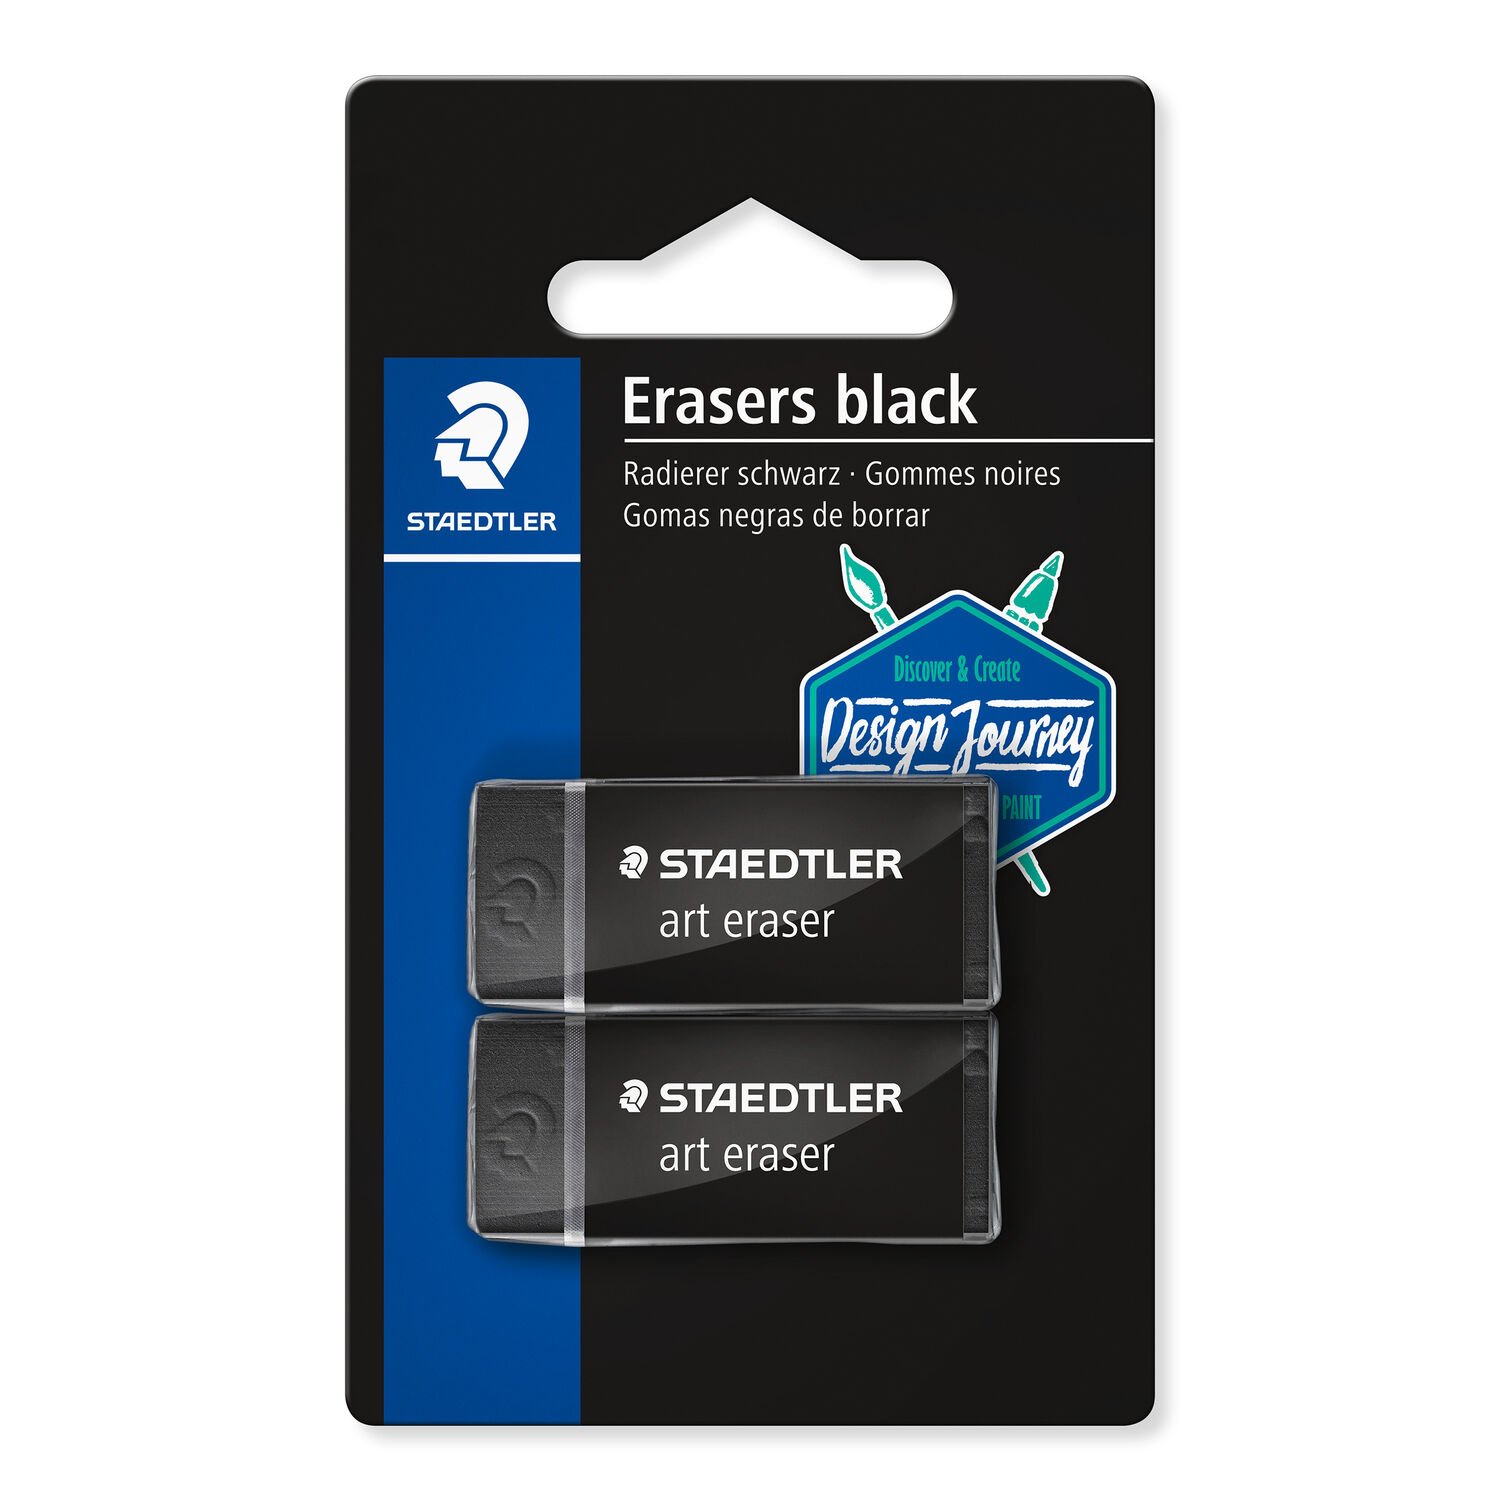 STAEDTLER 526 B209 Rasoplas Large BLACK EDITION Eraser Set of 3-latex Free 